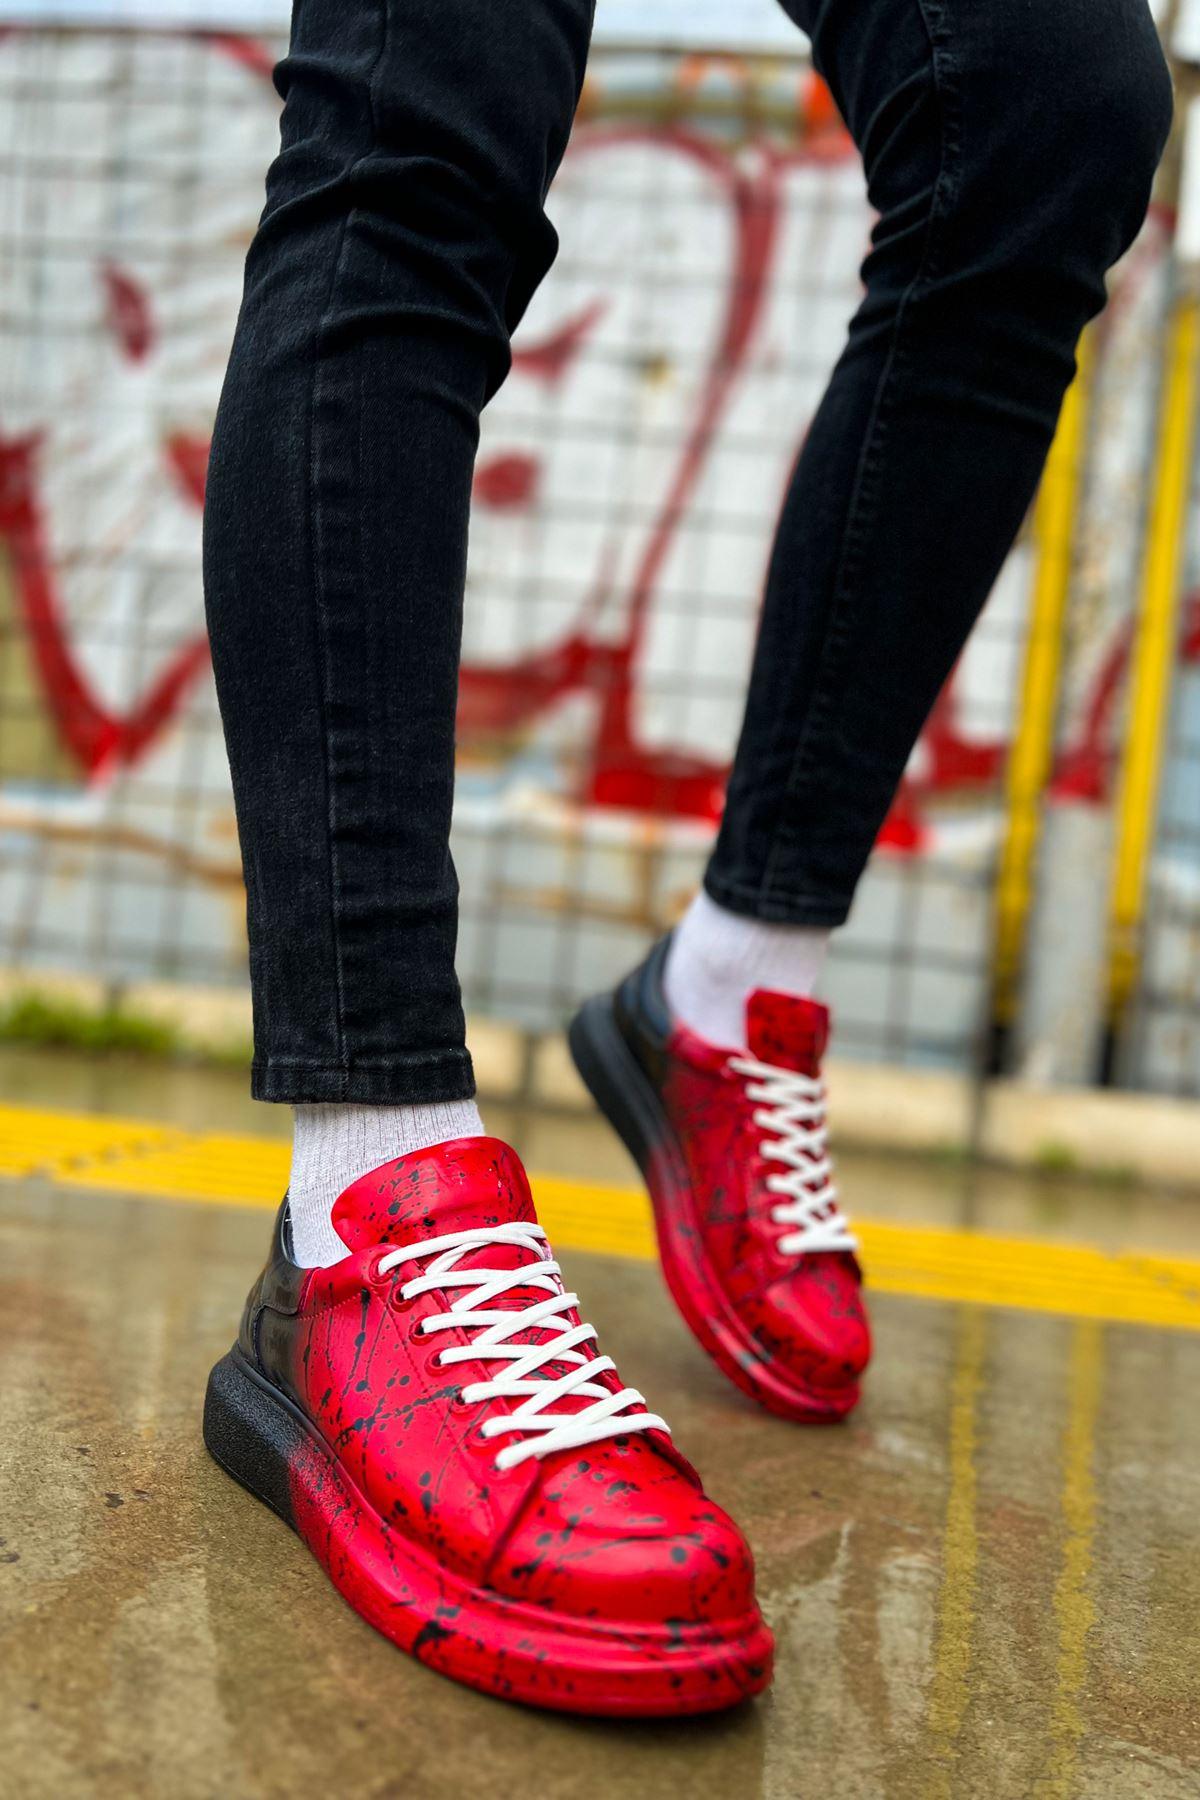 CH254 Men's Sports Sneakers Shoes RED BLACK SPLUSH - STREET MODE ™